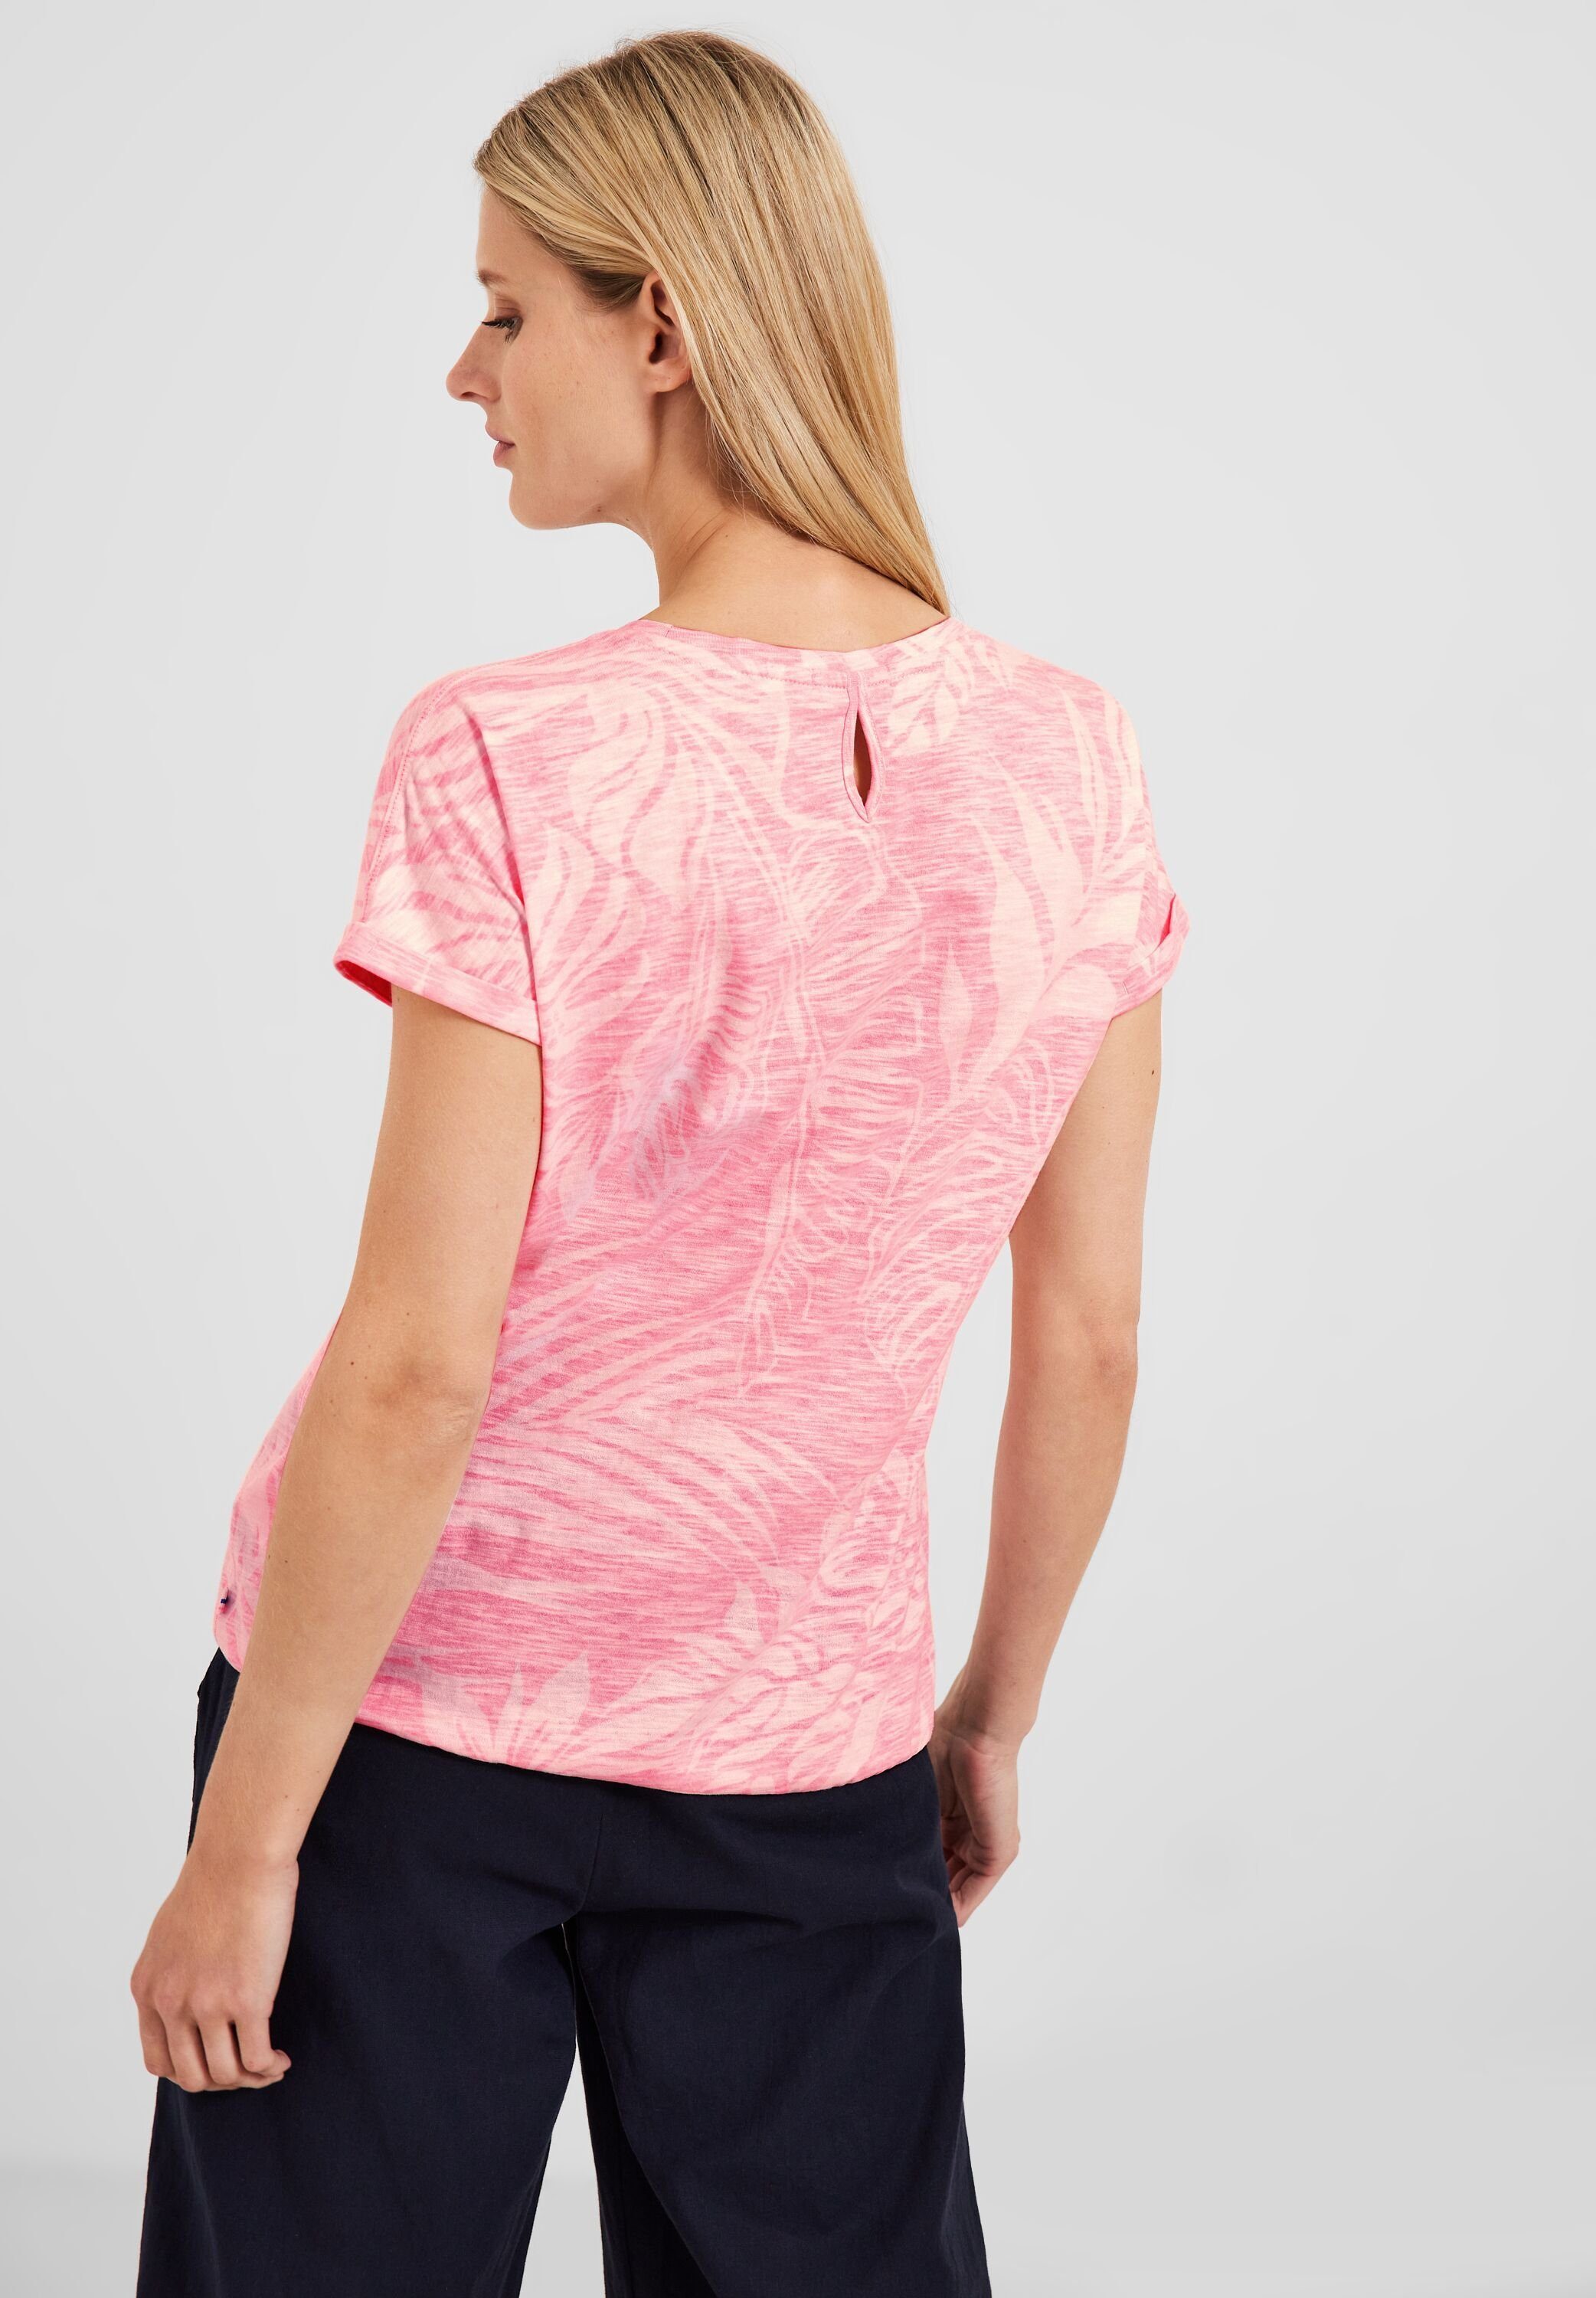 Cecil T-Shirt soft pink